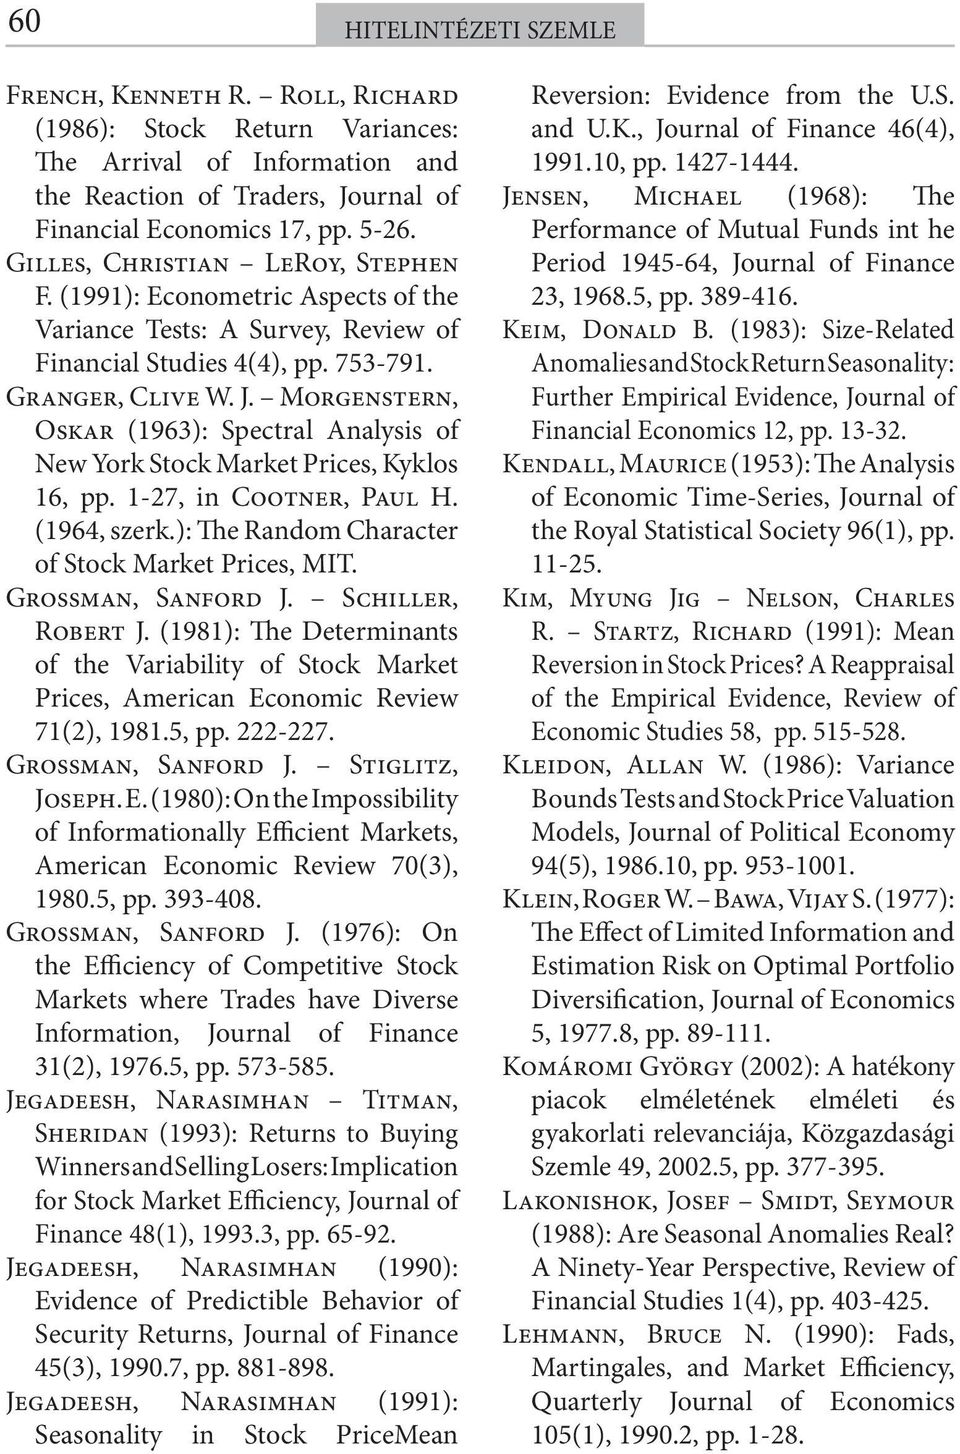 Morgenstern, Oskar (1963): Spectral Analysis of New York Stock Market Prices, Kyklos 16, pp. 1-27, in Cootner, Paul H. (1964, szerk.): The Random Character of Stock Market Prices, MIT.